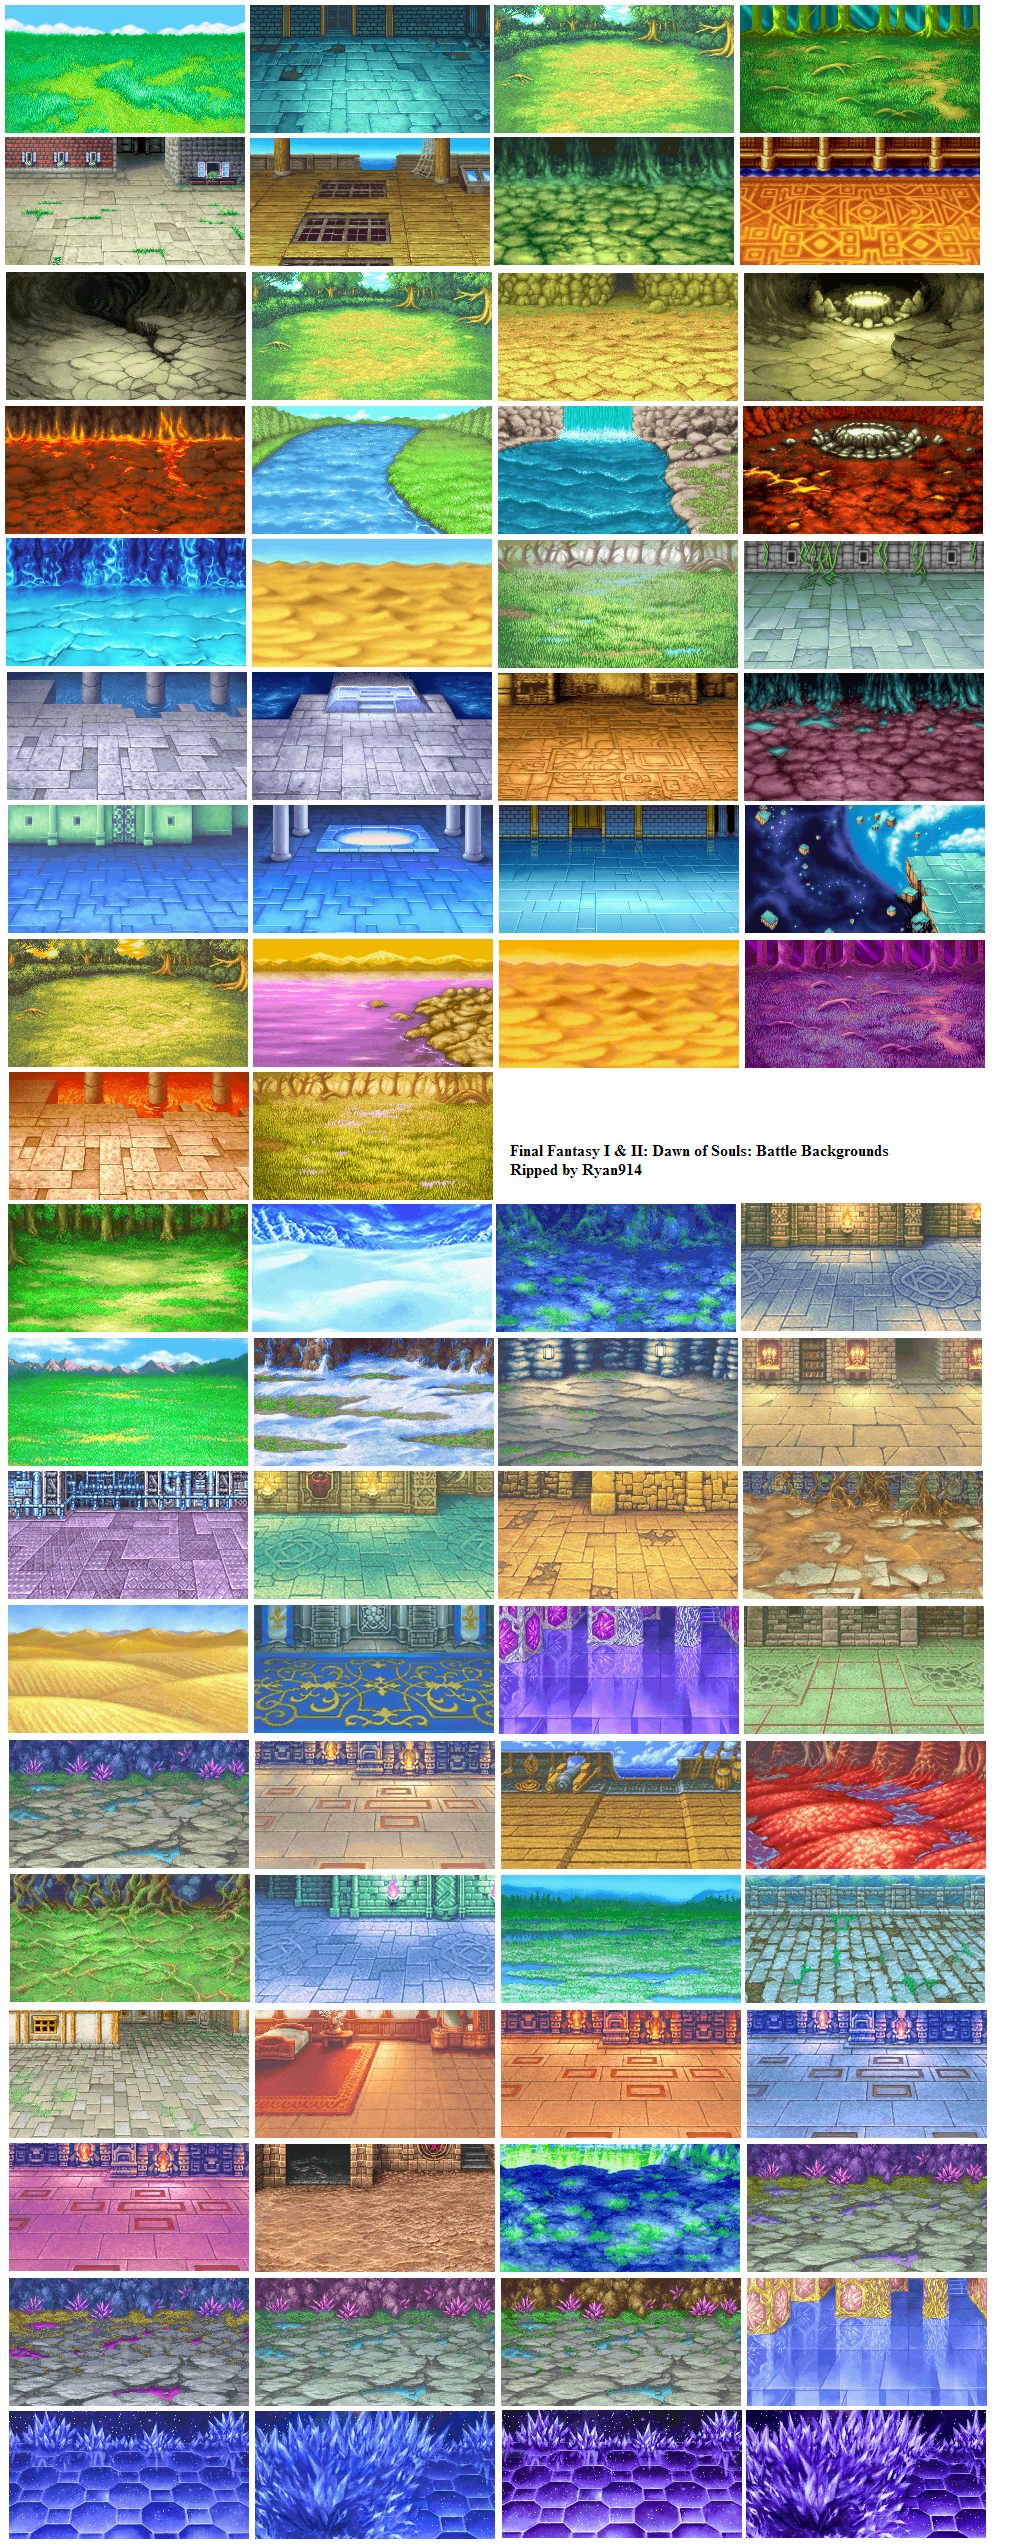 Final Fantasy 1: Dawn of Souls - Battle Backgrounds